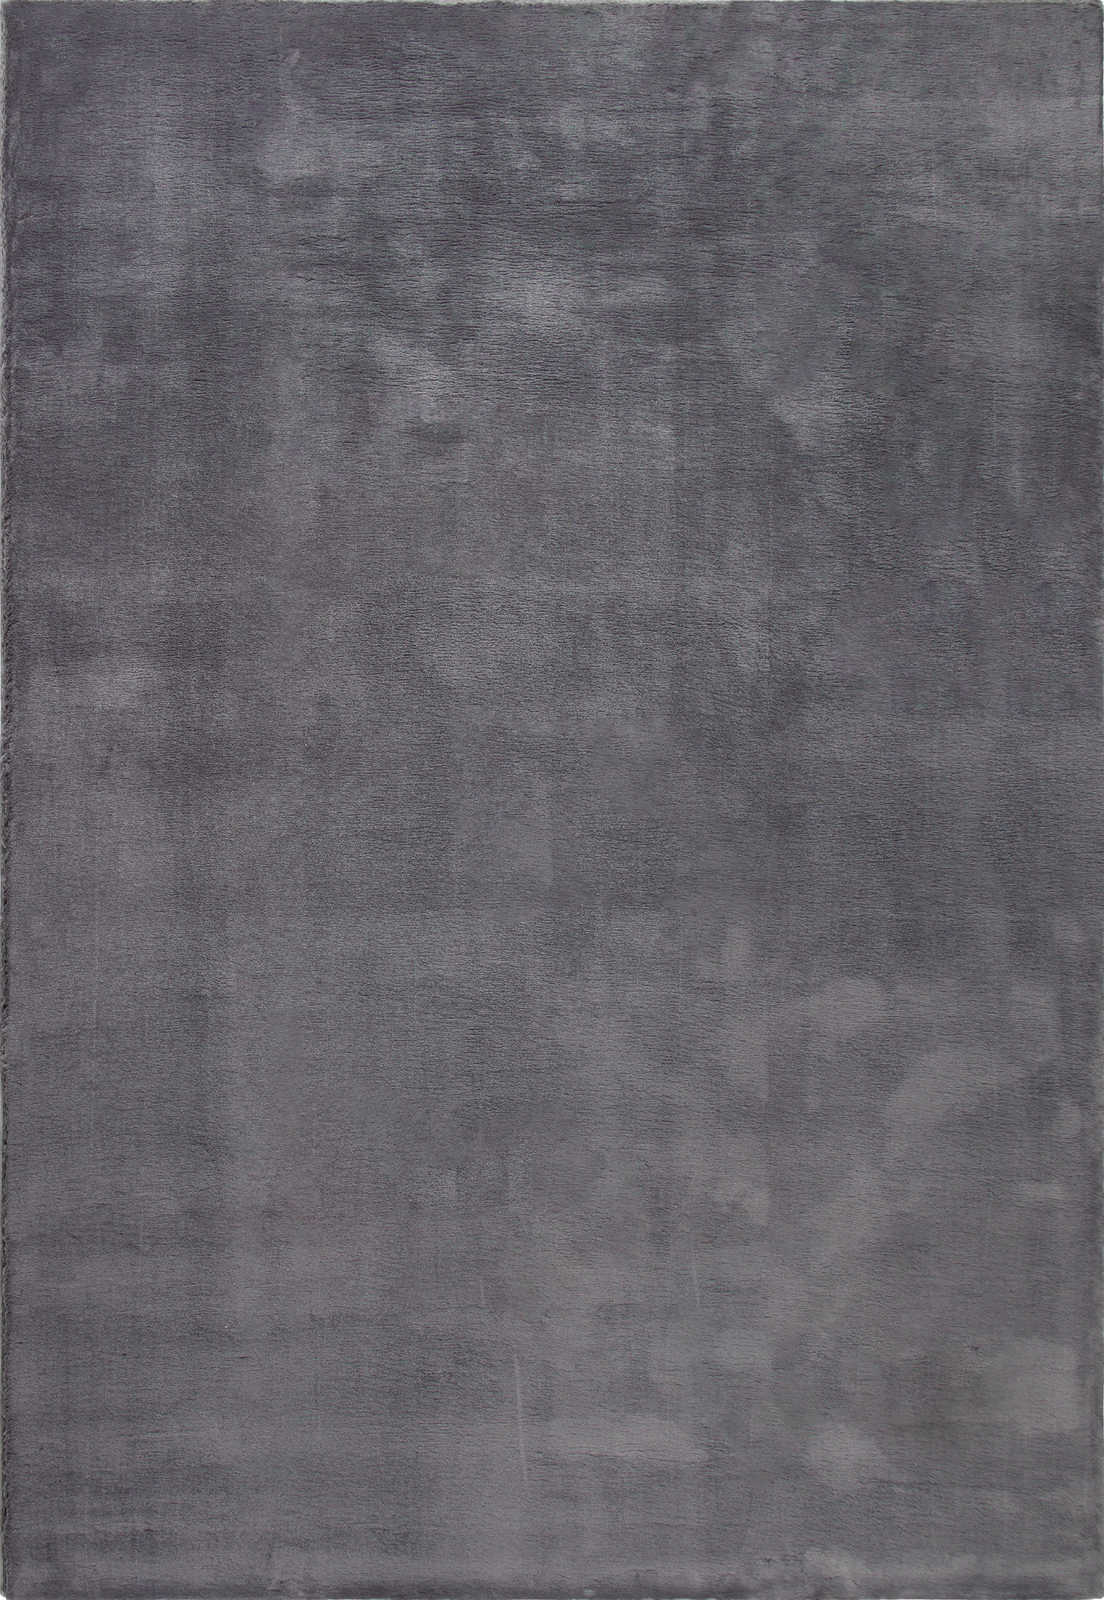             Modern high pile carpet in anthracite - 110 x 60 cm
        